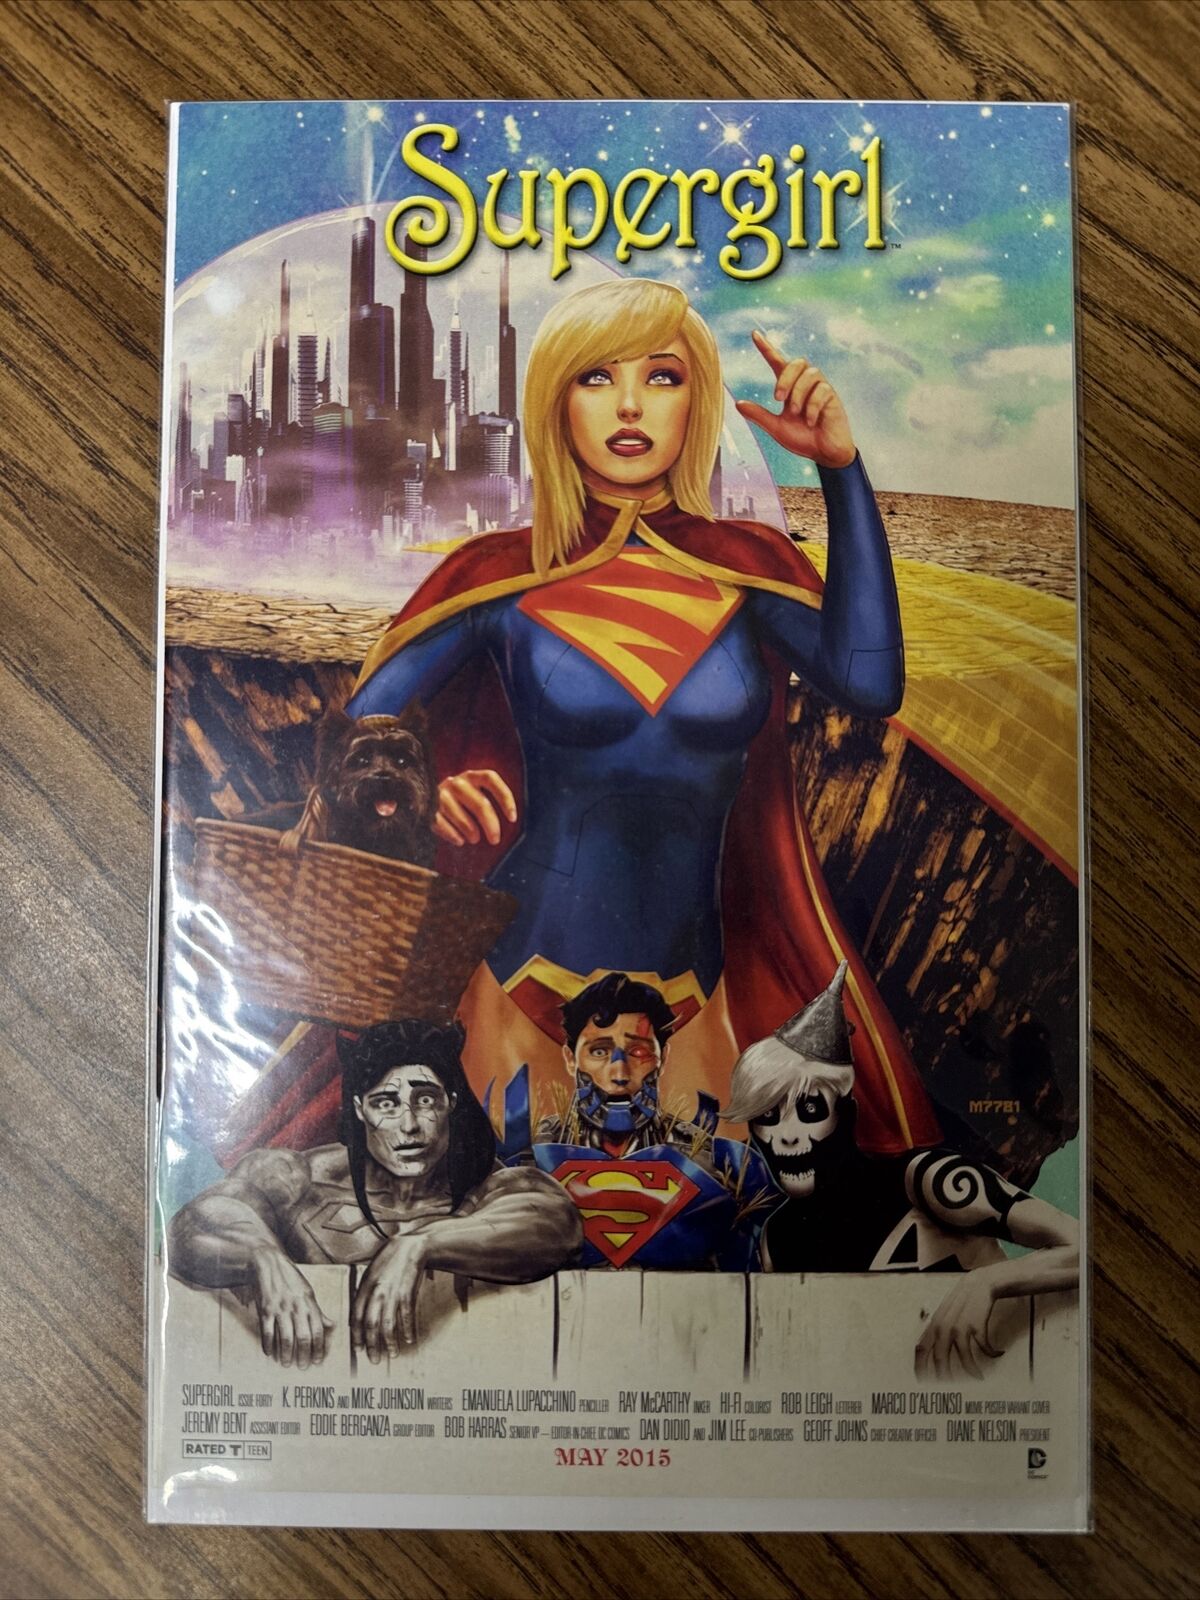 SUPERGIRL #40 Movie Poster Variant Cover. Higher Grade